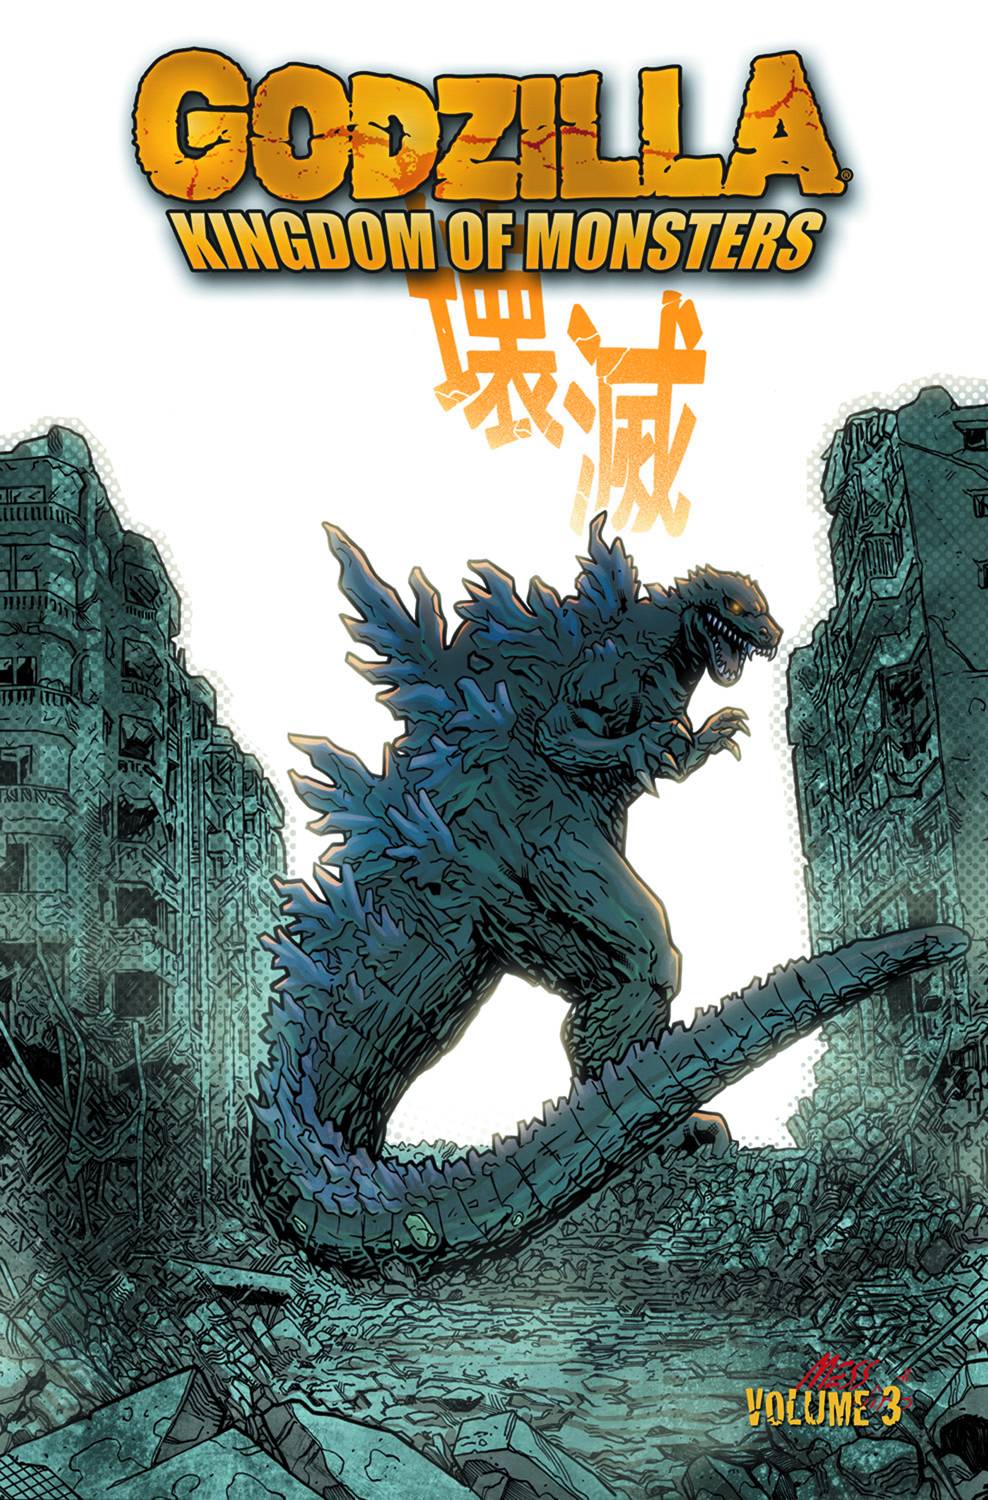 Godzilla Kingdom of Monsters Graphic Novel Volume 3